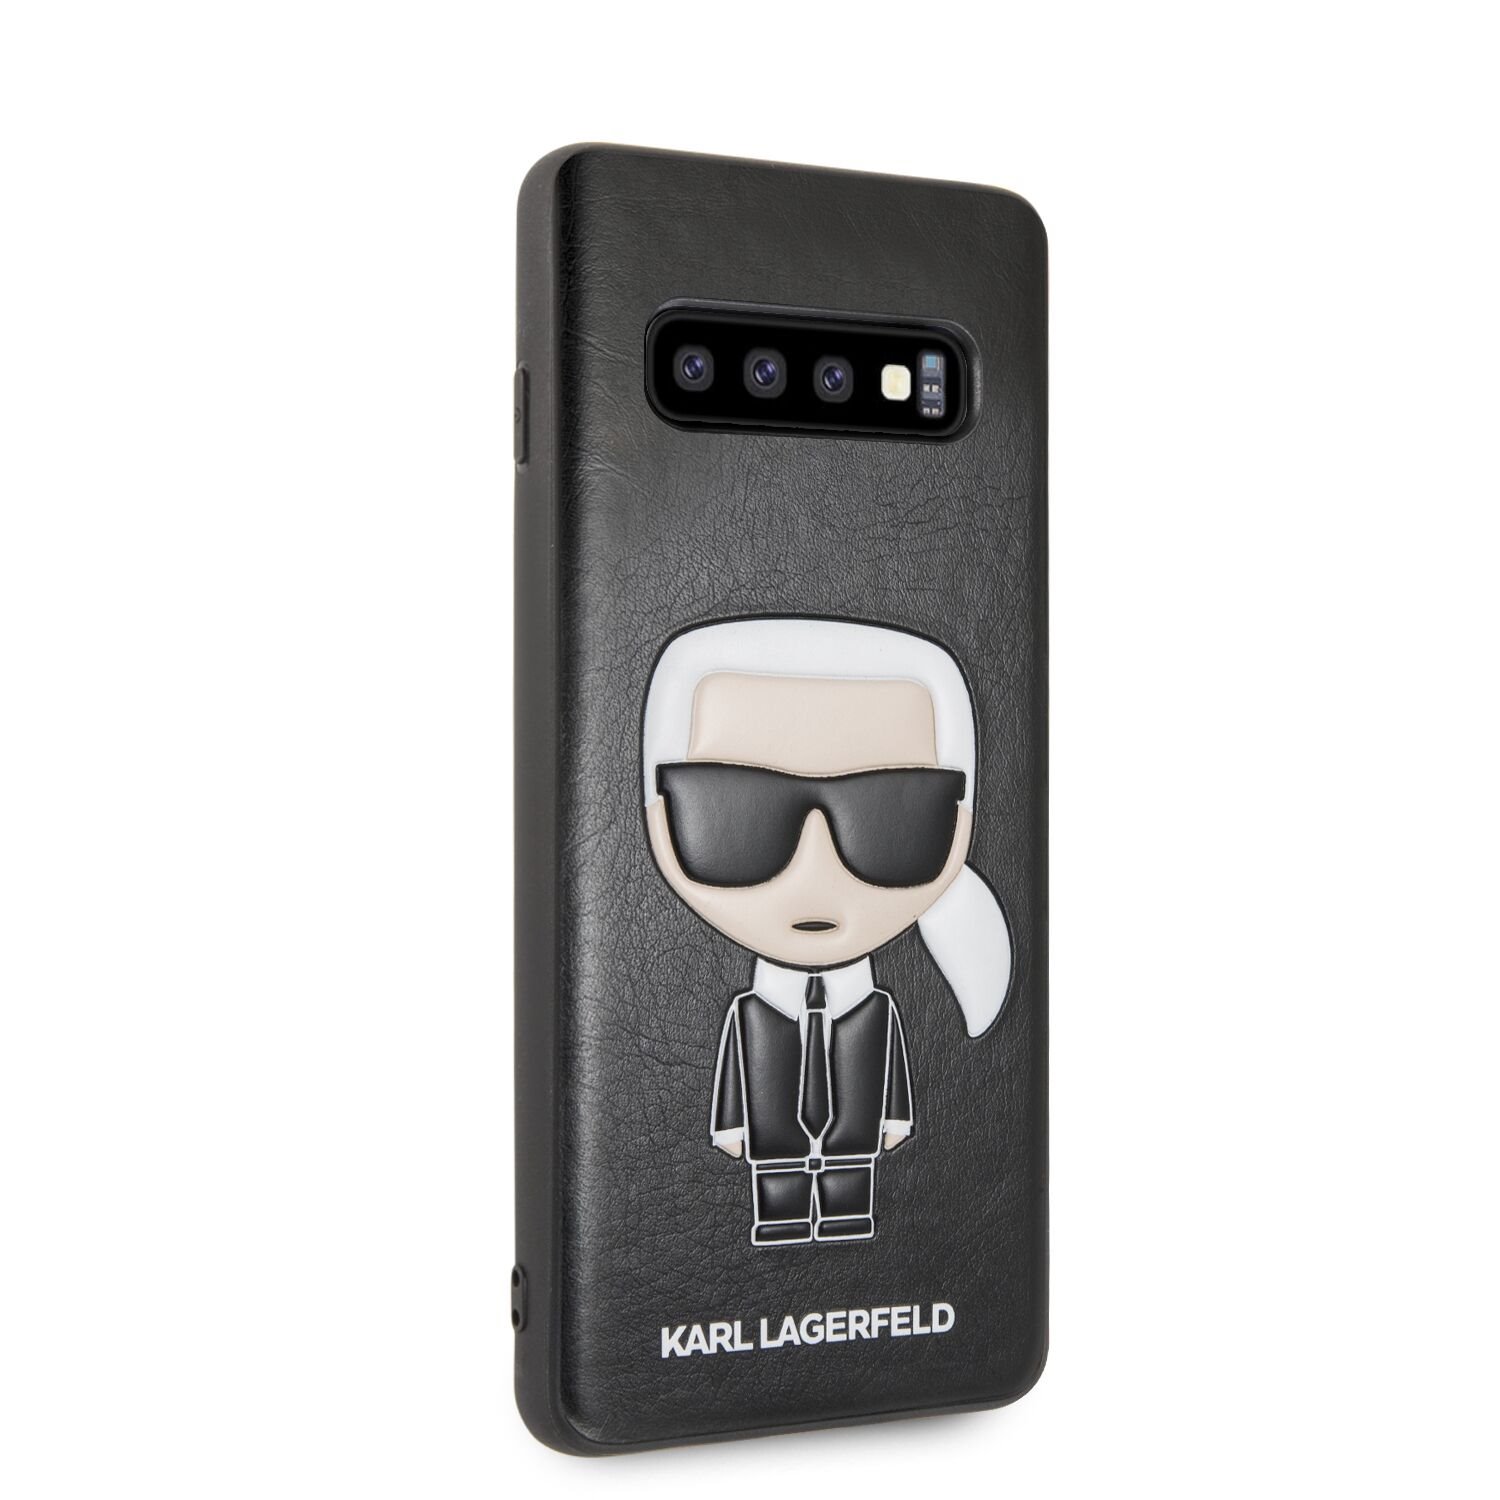 Silikonové pouzdro Karl Lagerfeld Ikonik Full Body pro Samsung Galaxy S10, black